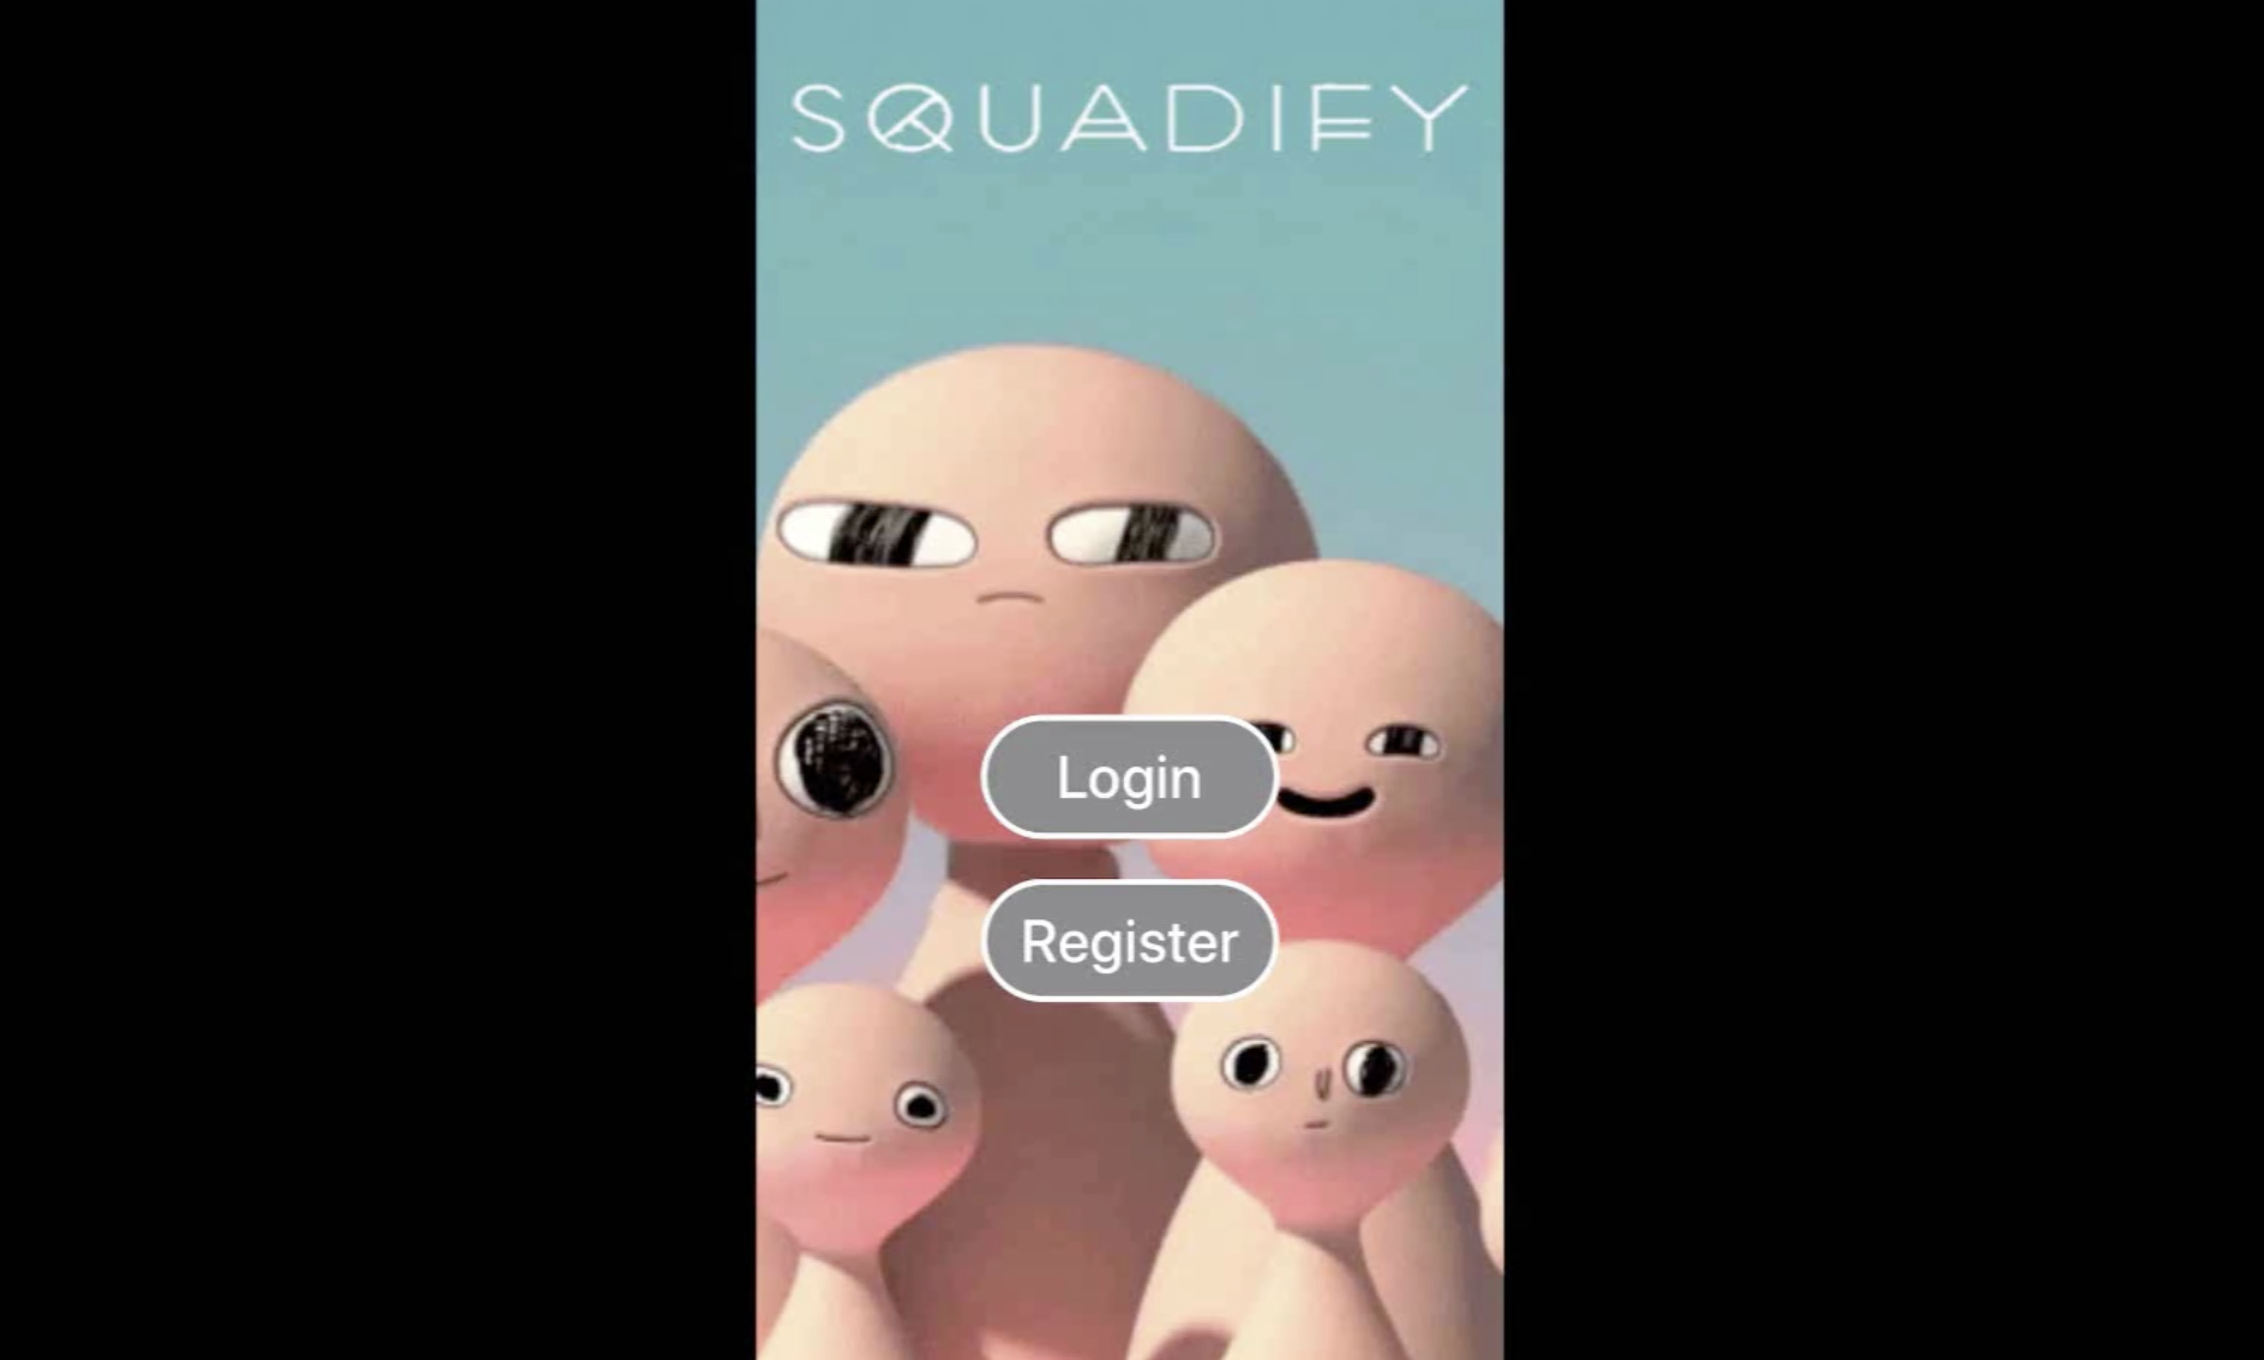 Squadify demo sample image